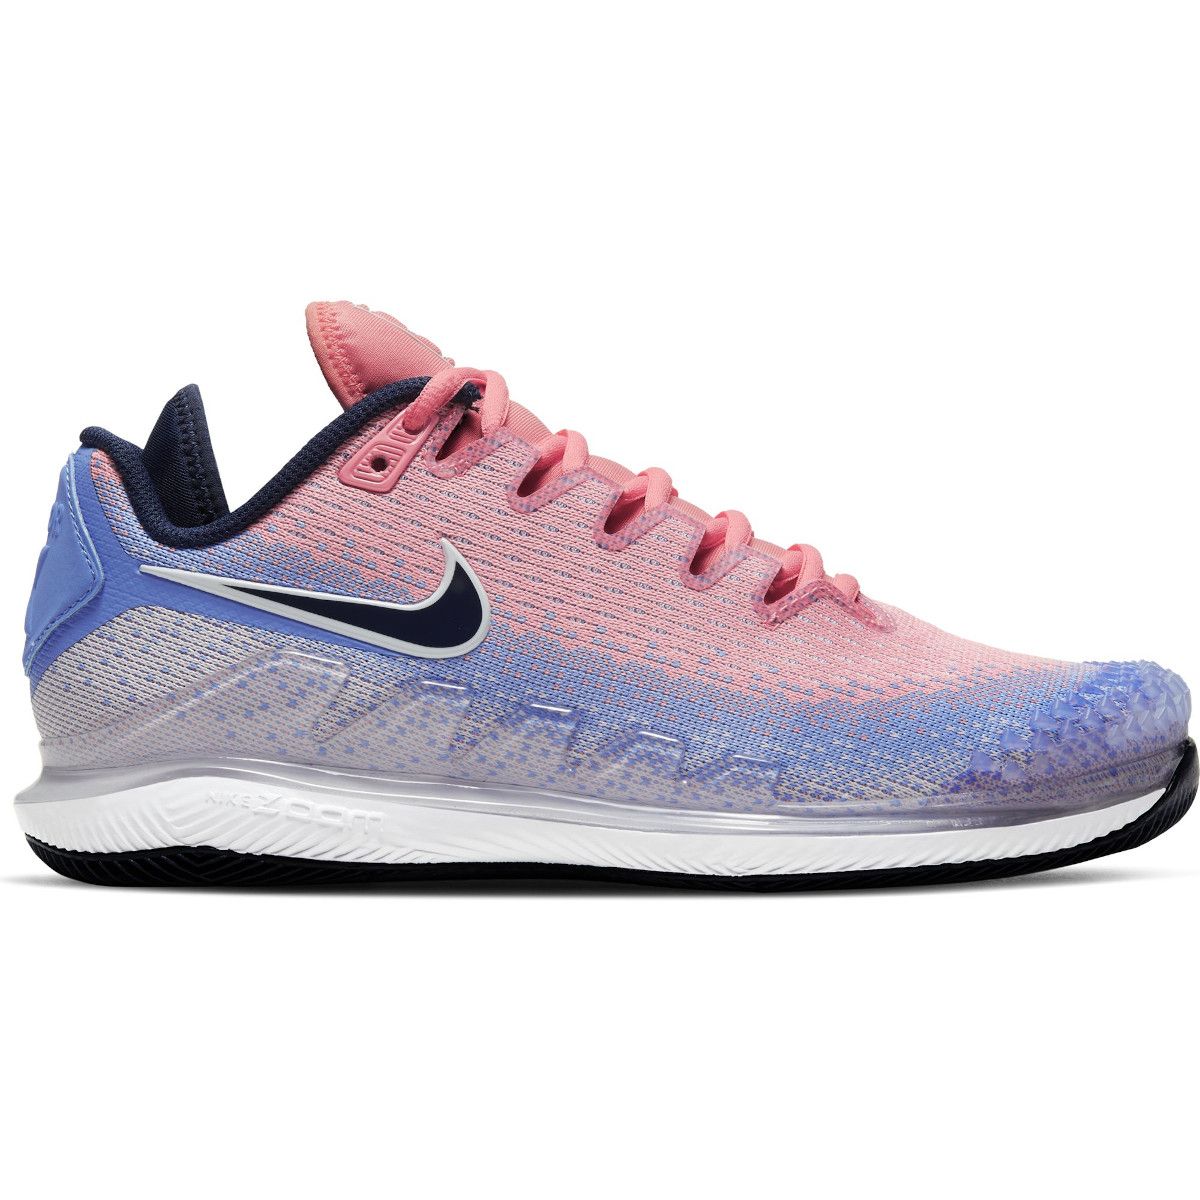 Nike Air Zoom Vapor X Knit Women's Tennis Shoes AR8835-406